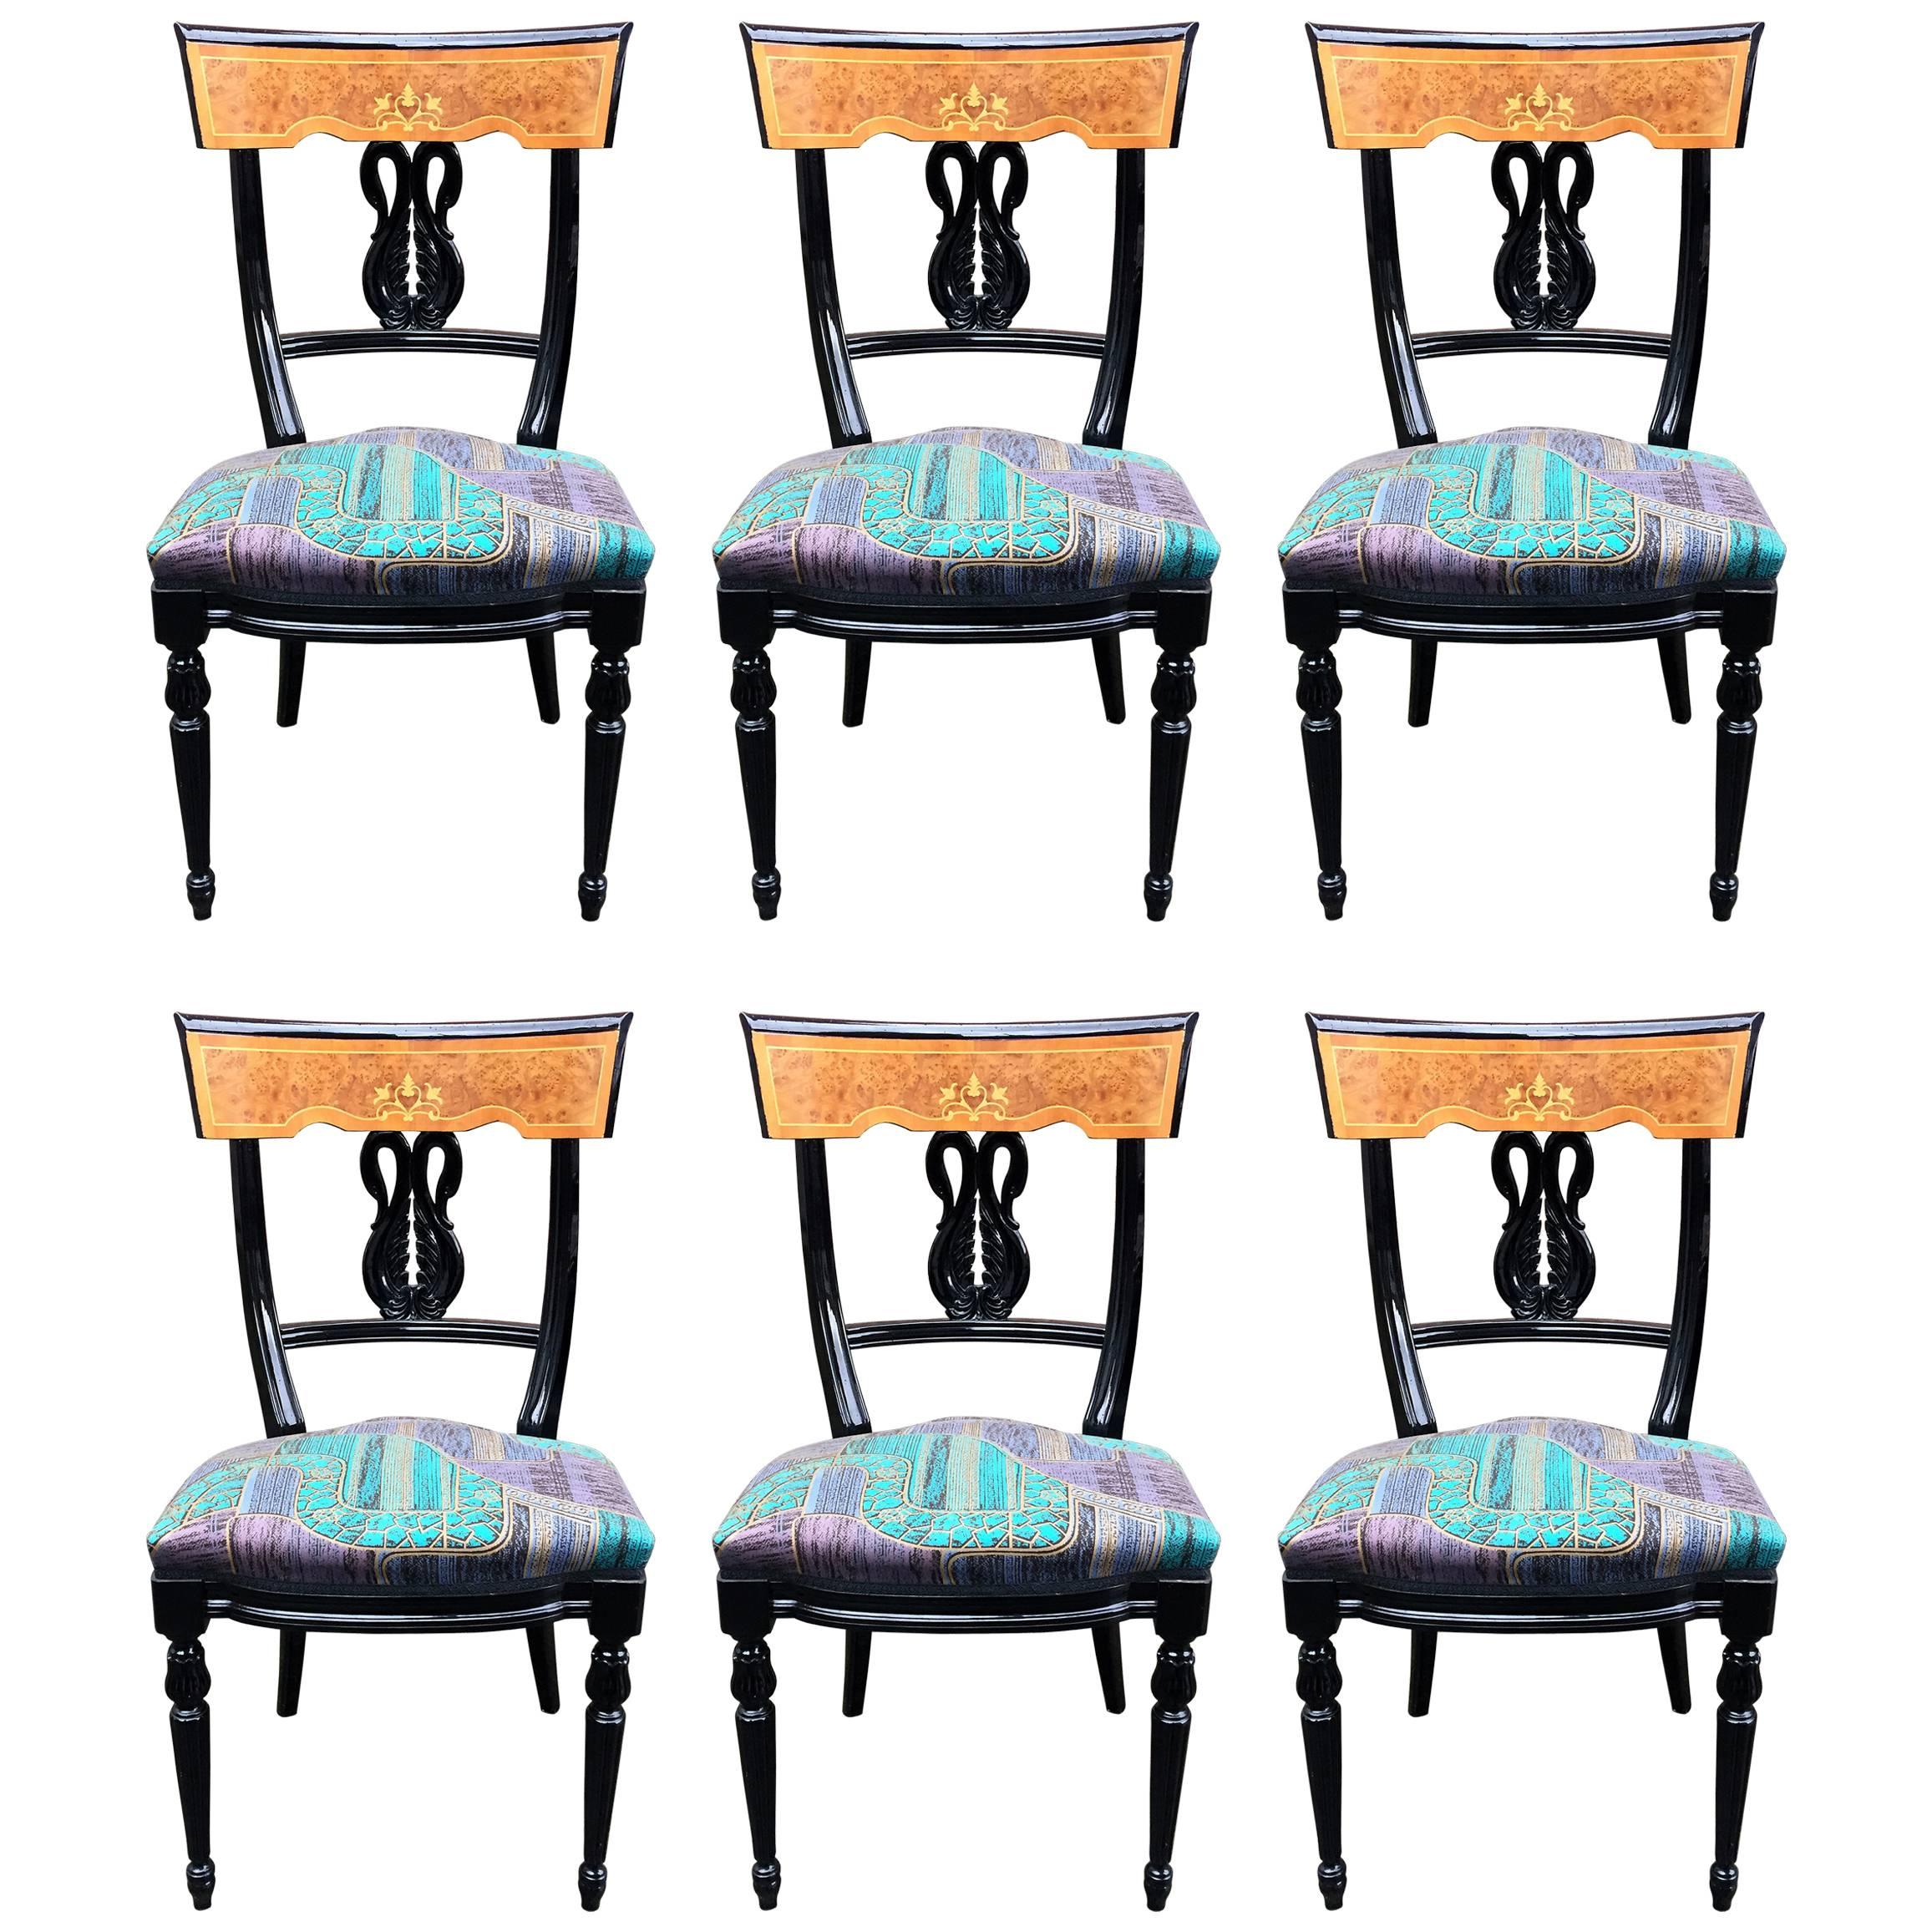 Six Neoclassical chairs circa 1970